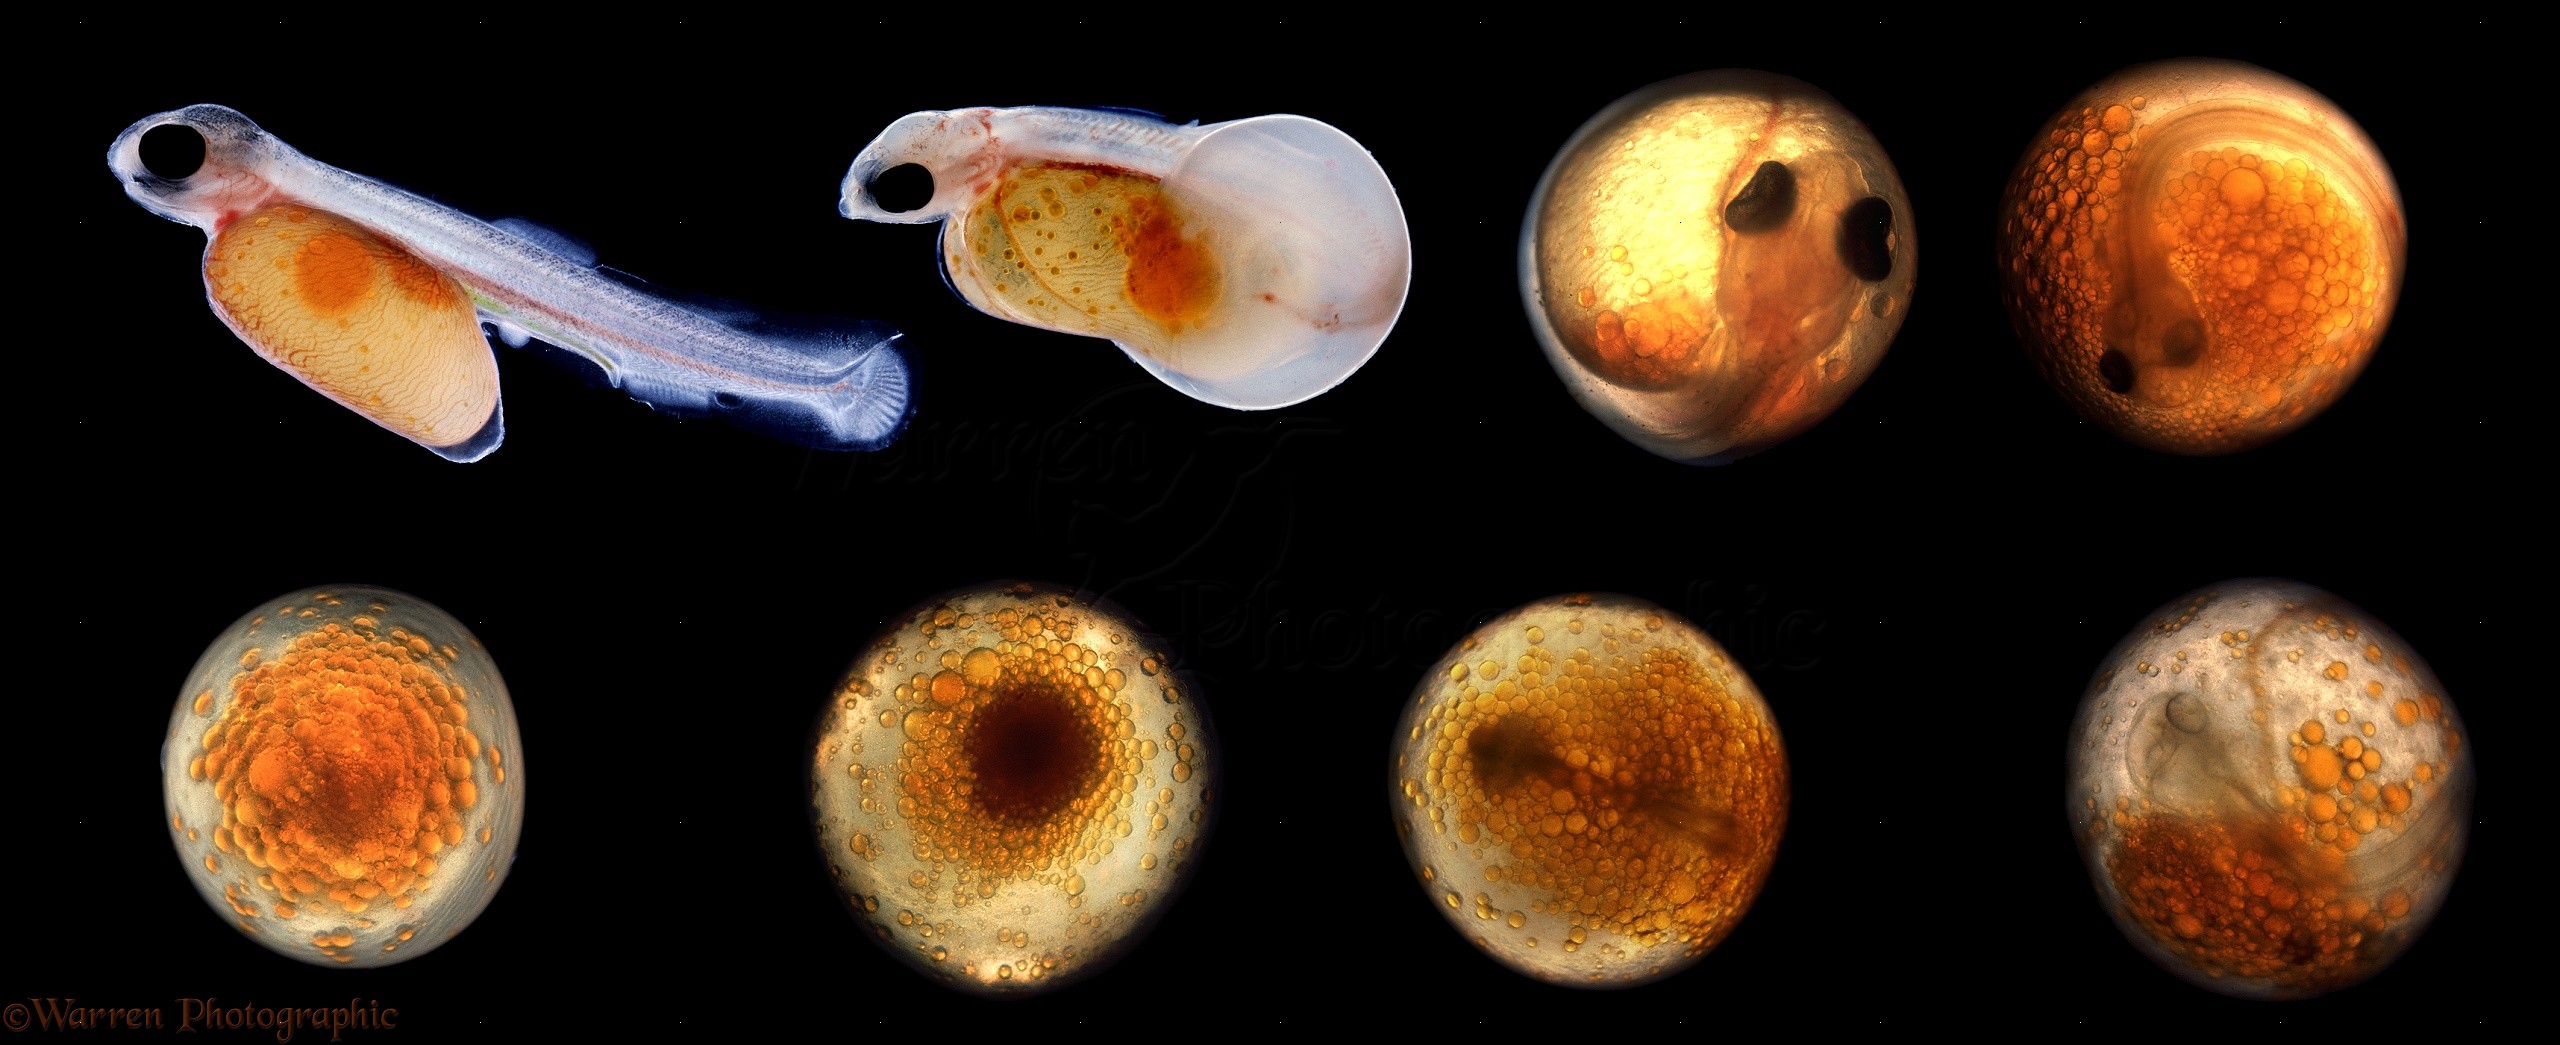 https://www.warrenphotographic.co.uk/photgraphy/bigs/09197-development-of-rainbow-trout-egg.jpg